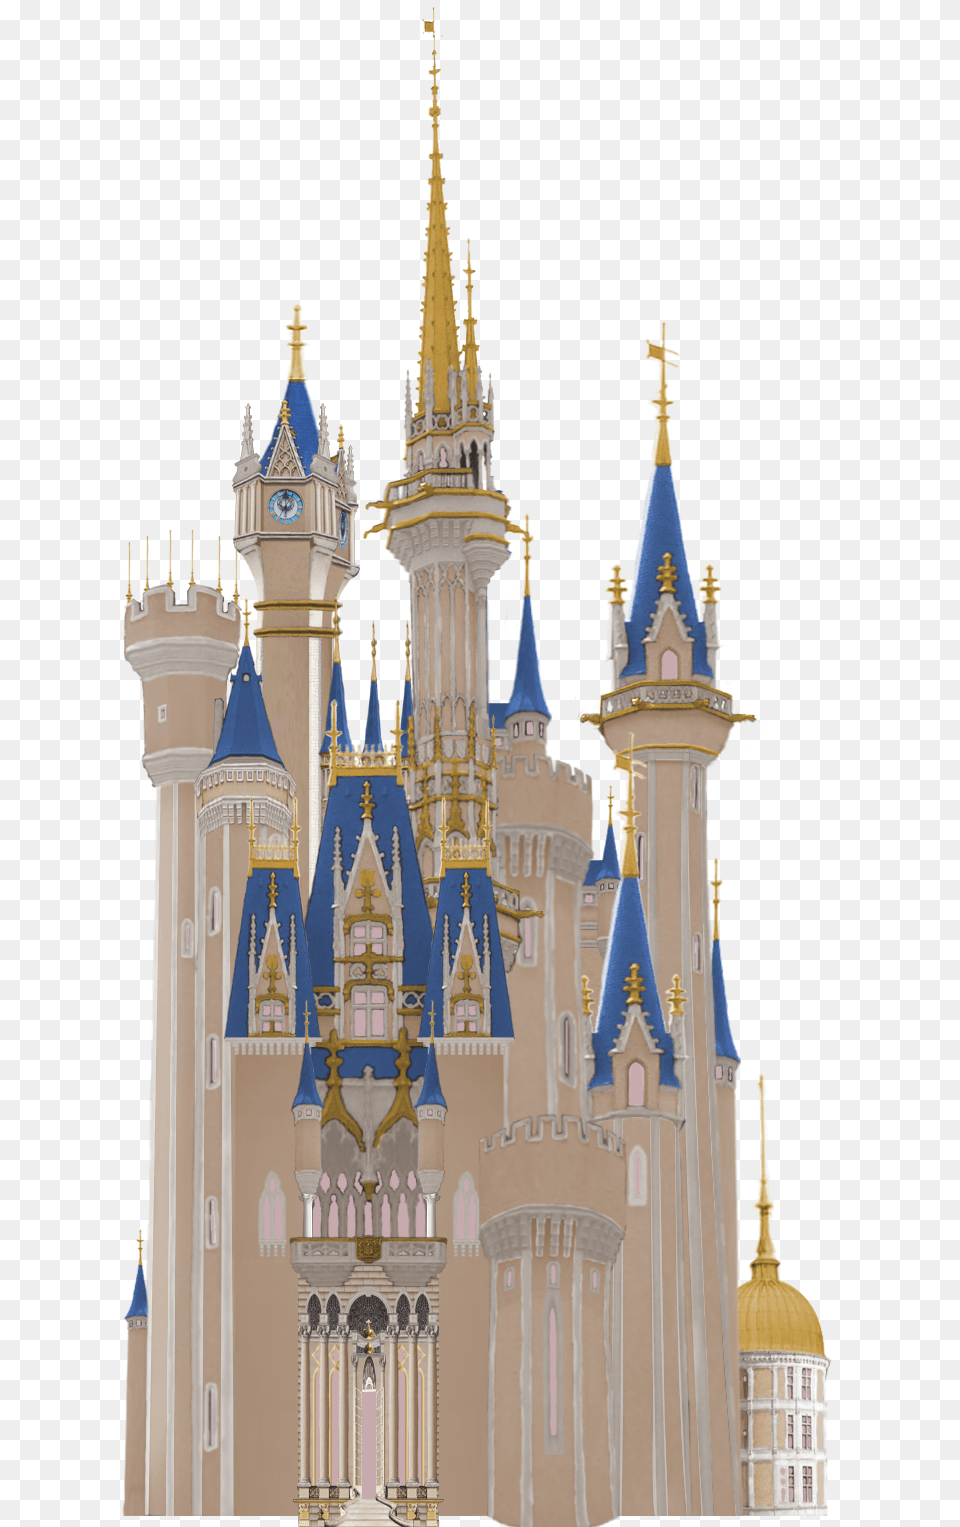 Castle Kingdom Hearts Cinderella Castle, Architecture, Building, Tower, Spire Png